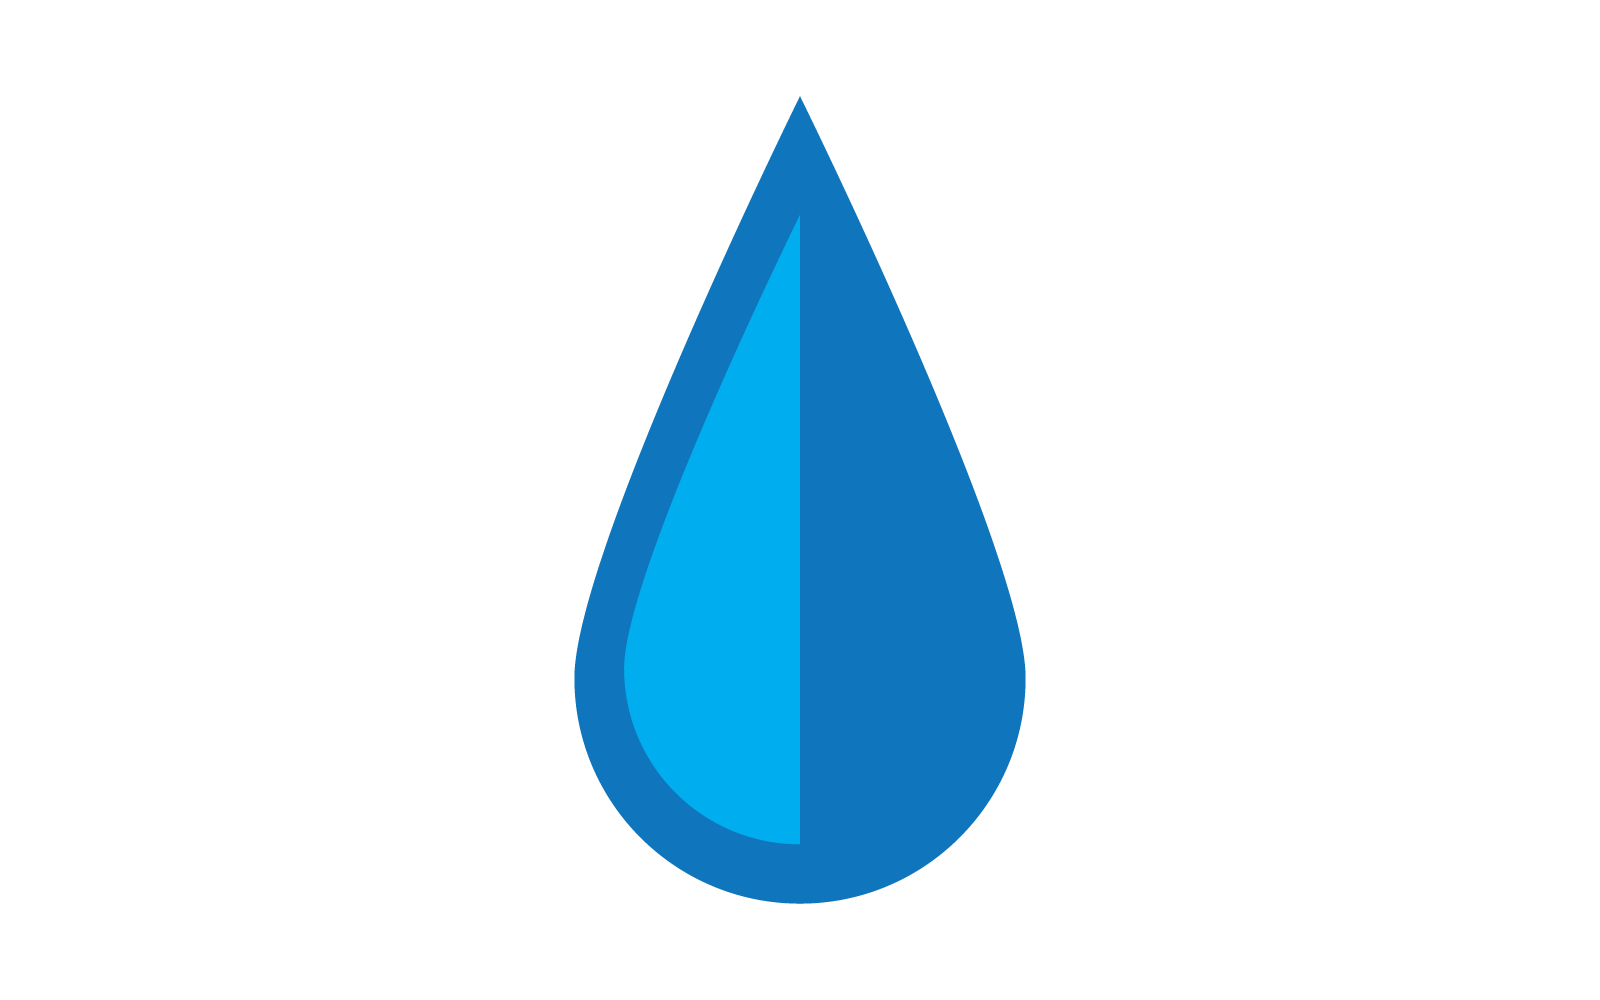 Water drop logo illustration flat design template